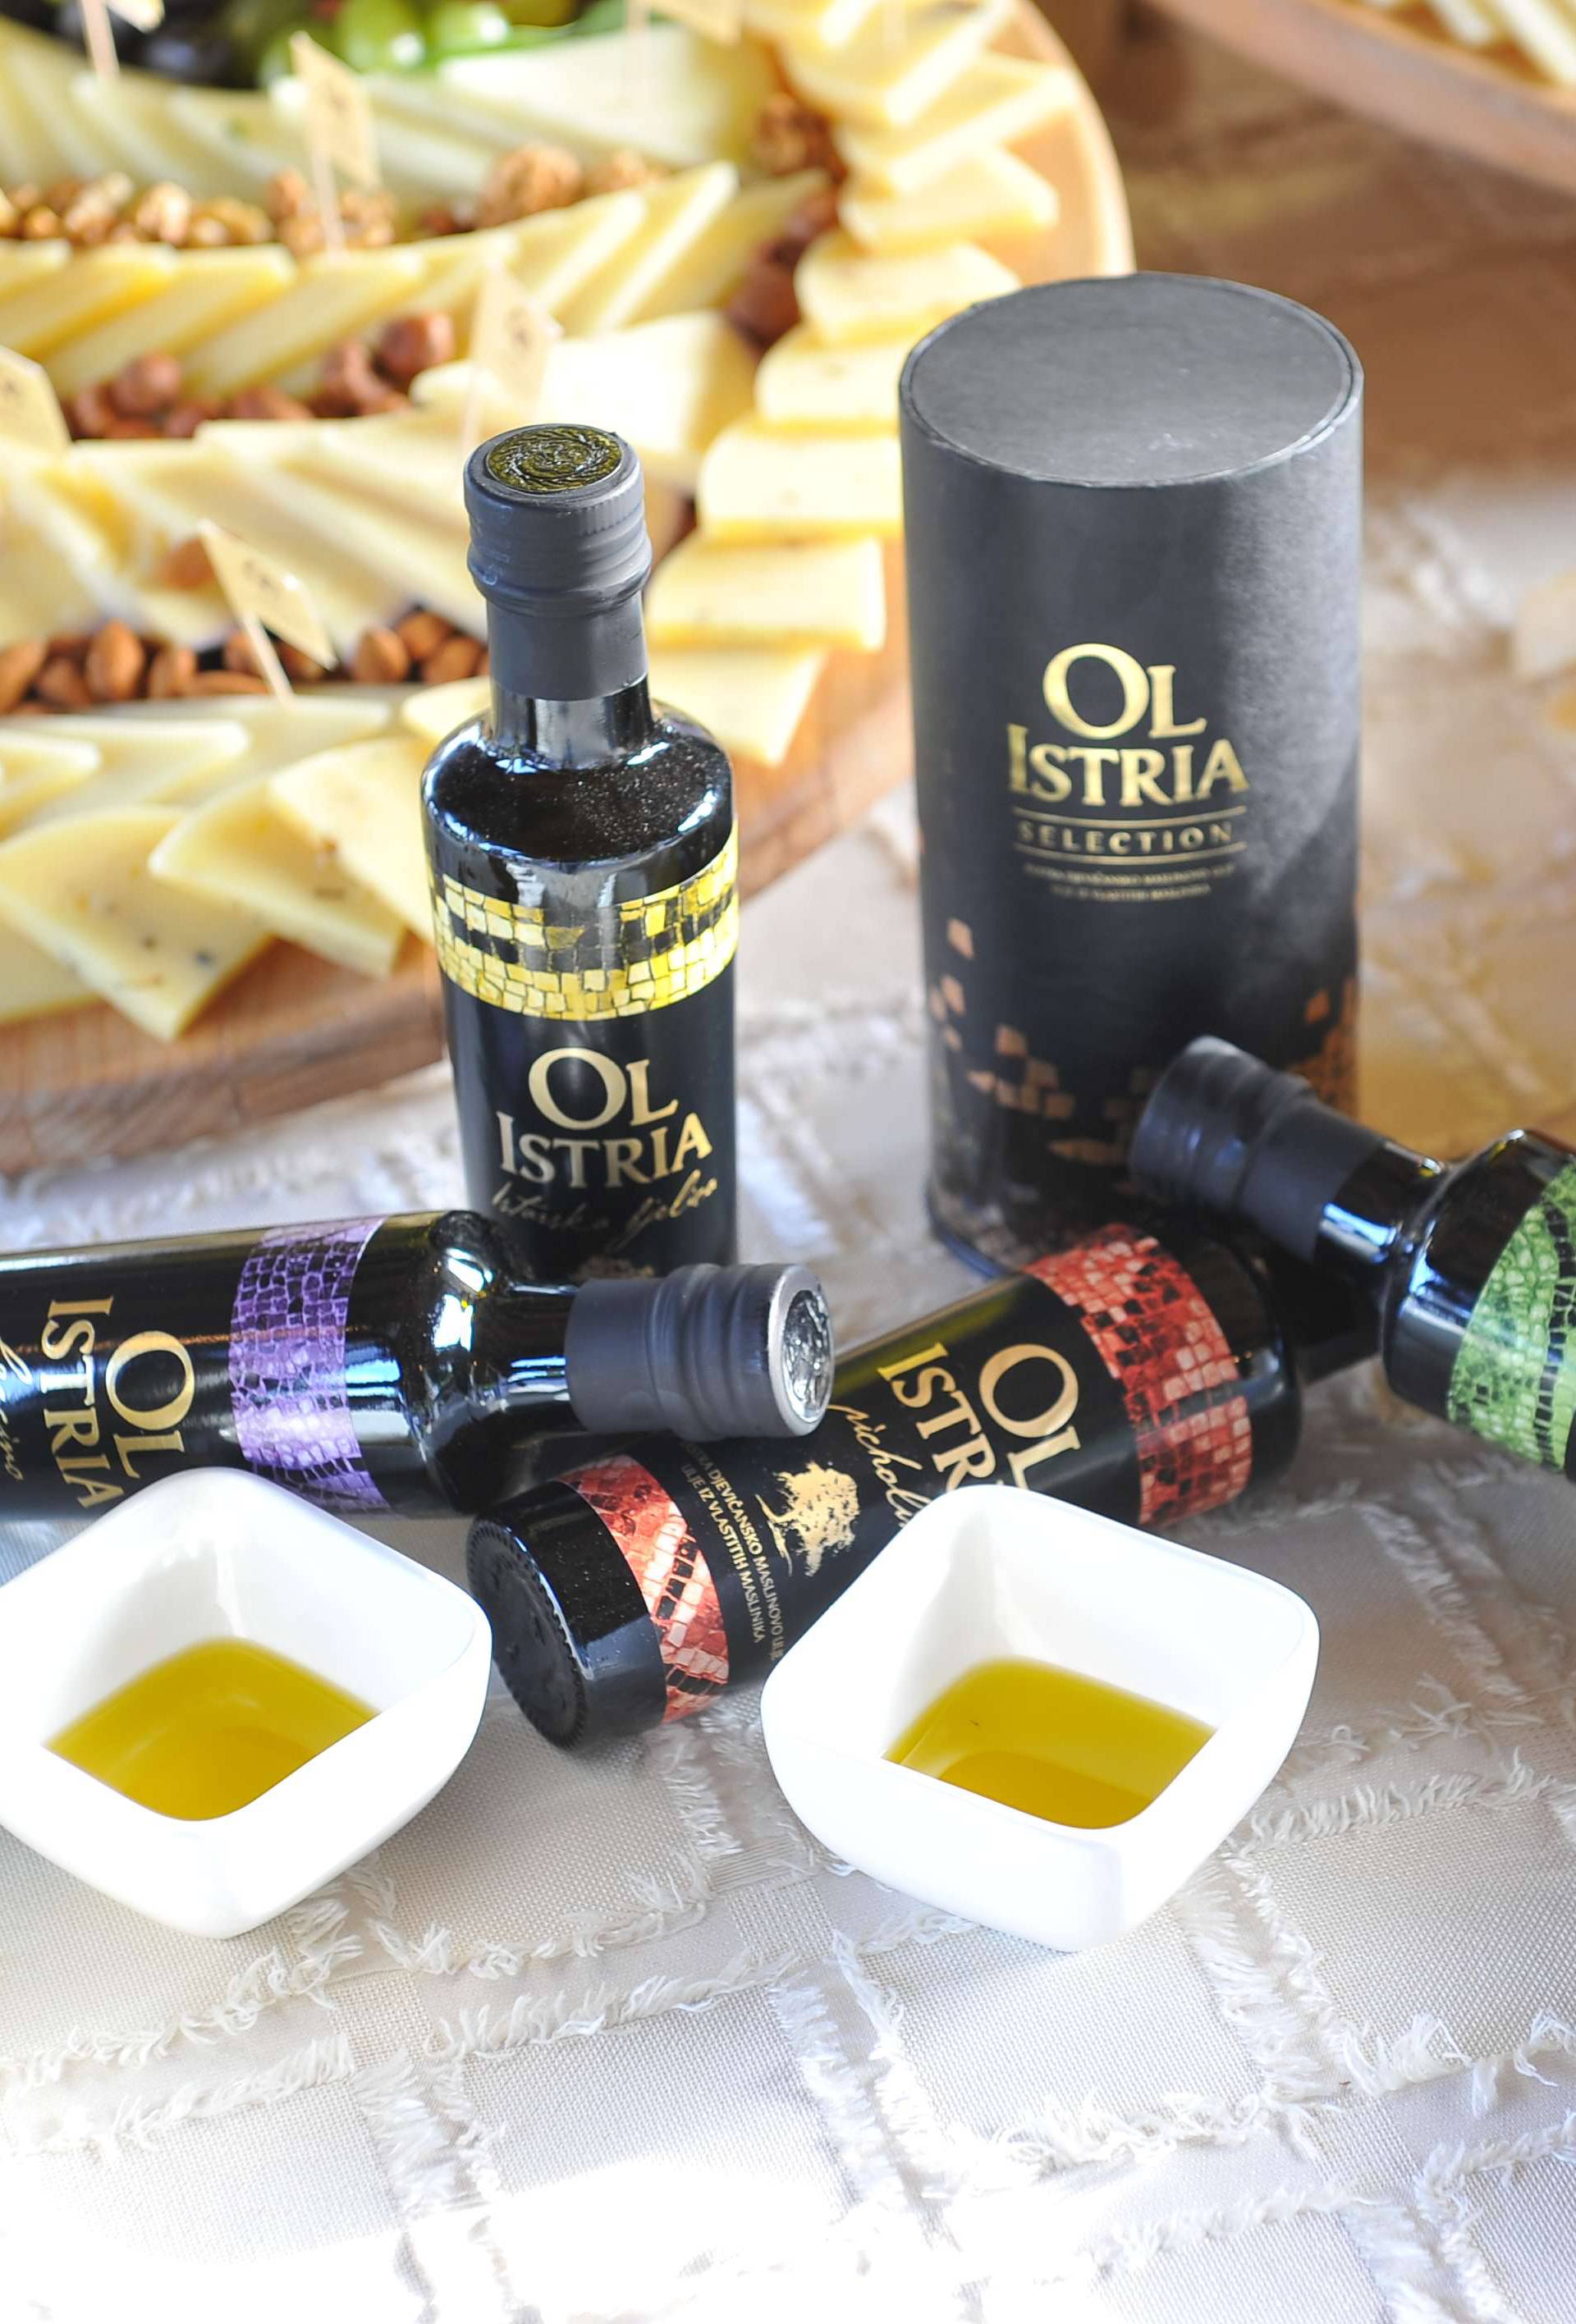 Ol Istria maslinova ulja ponovo osvojila New York